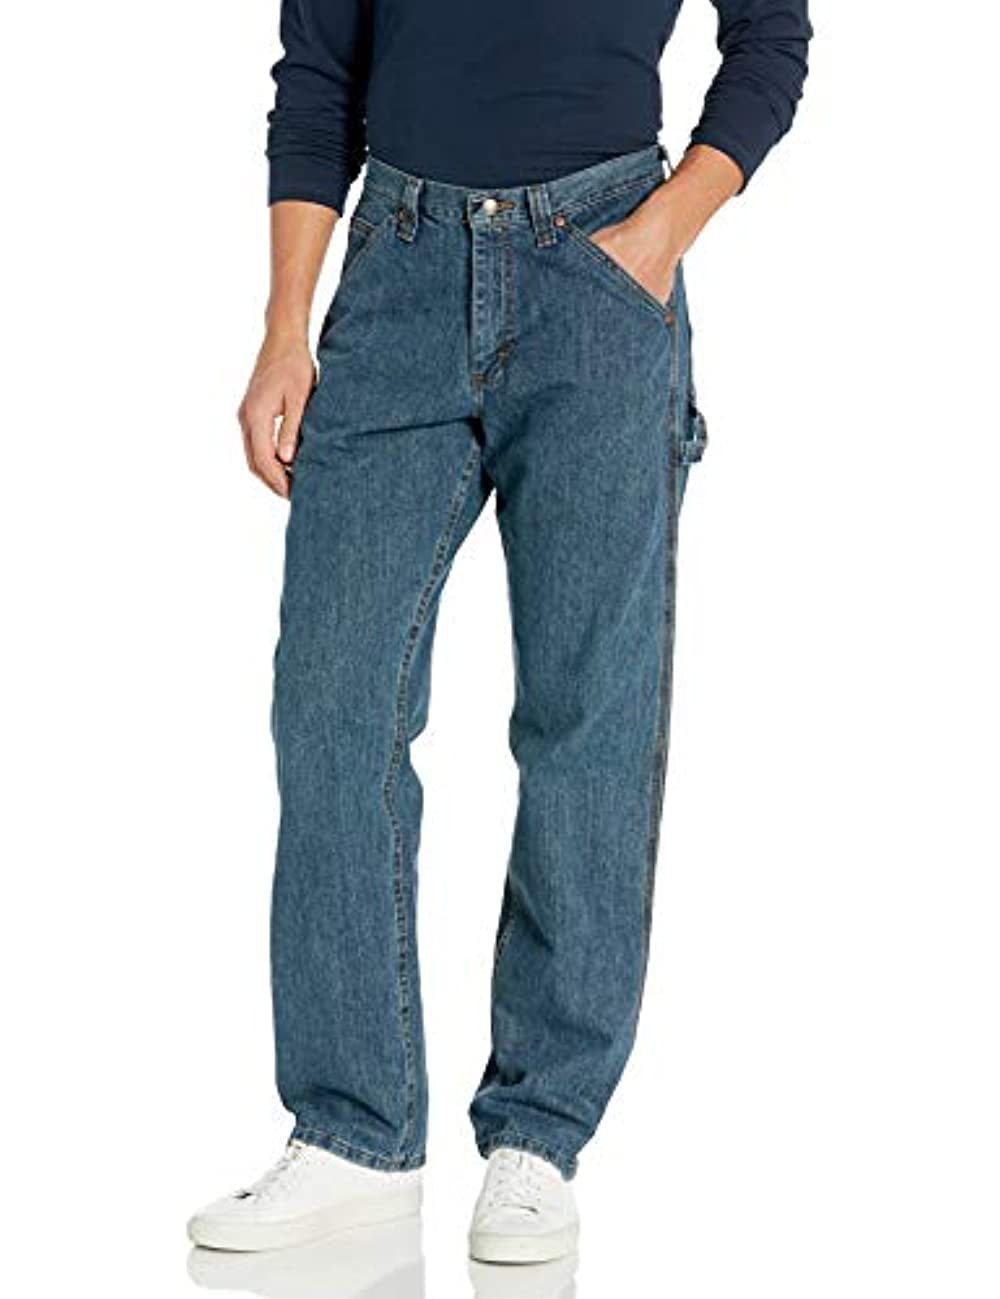 Lee Dungarees Carpenter Jean Men's LEE Pants - Walmart.com